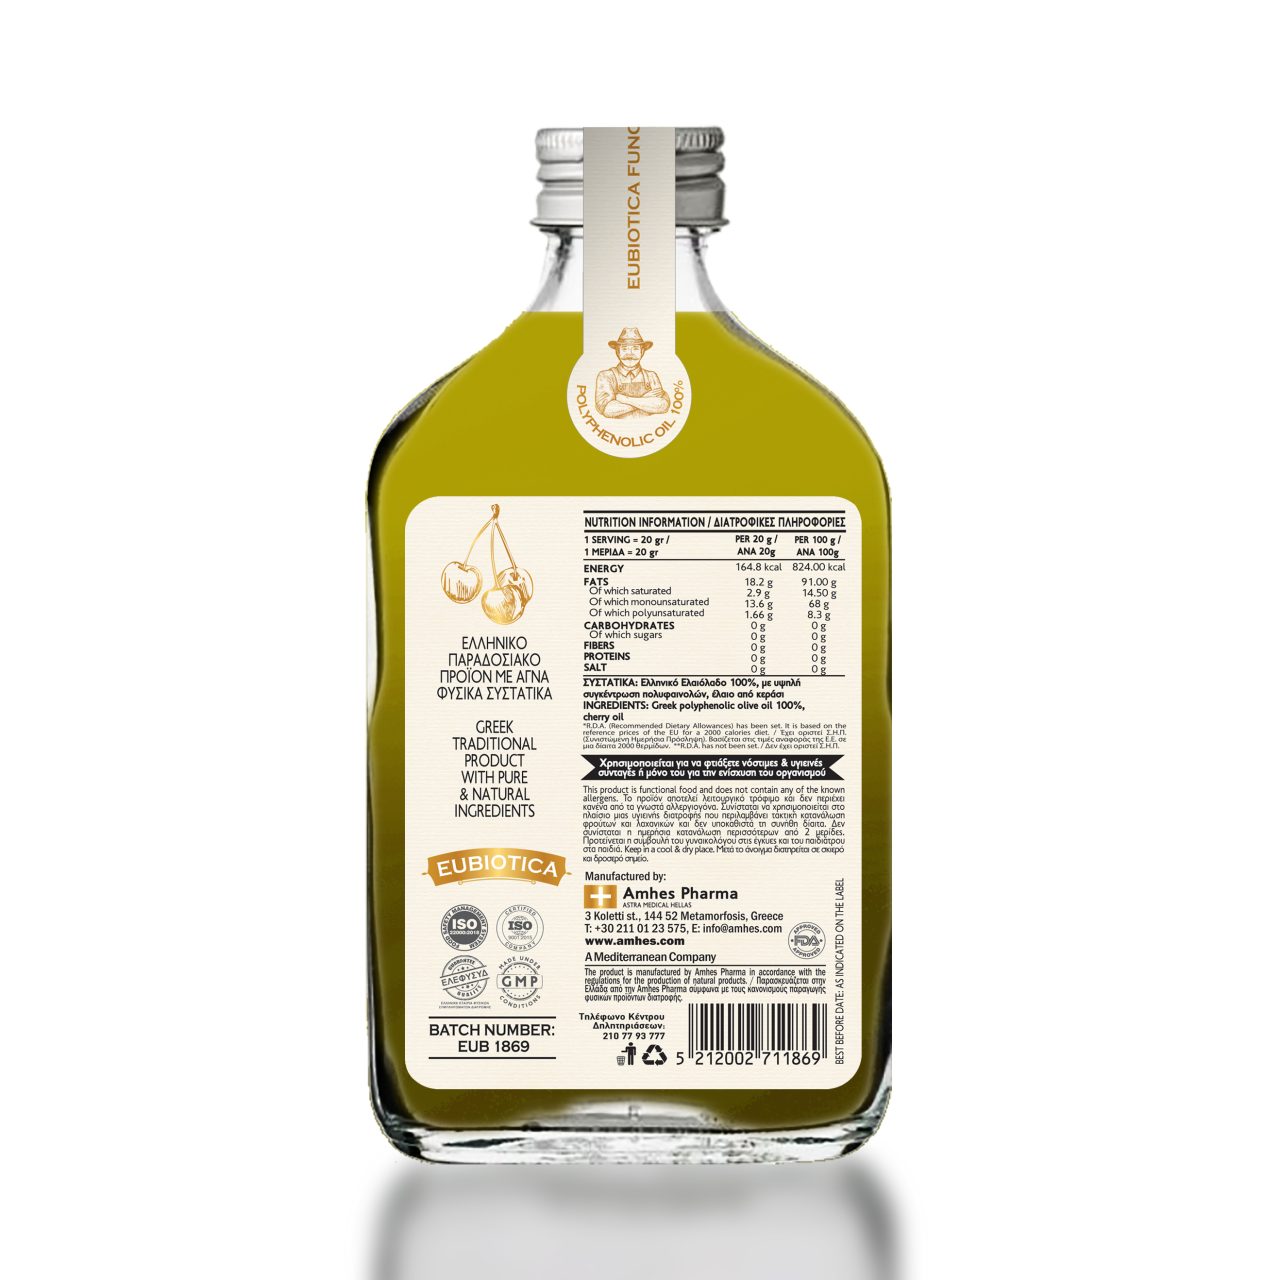 EUBIOTICA olive oil Cherry - Amhes Pharma - Εργοστάσιο Φυσικών Συμπληρωμάτων Διατροφής